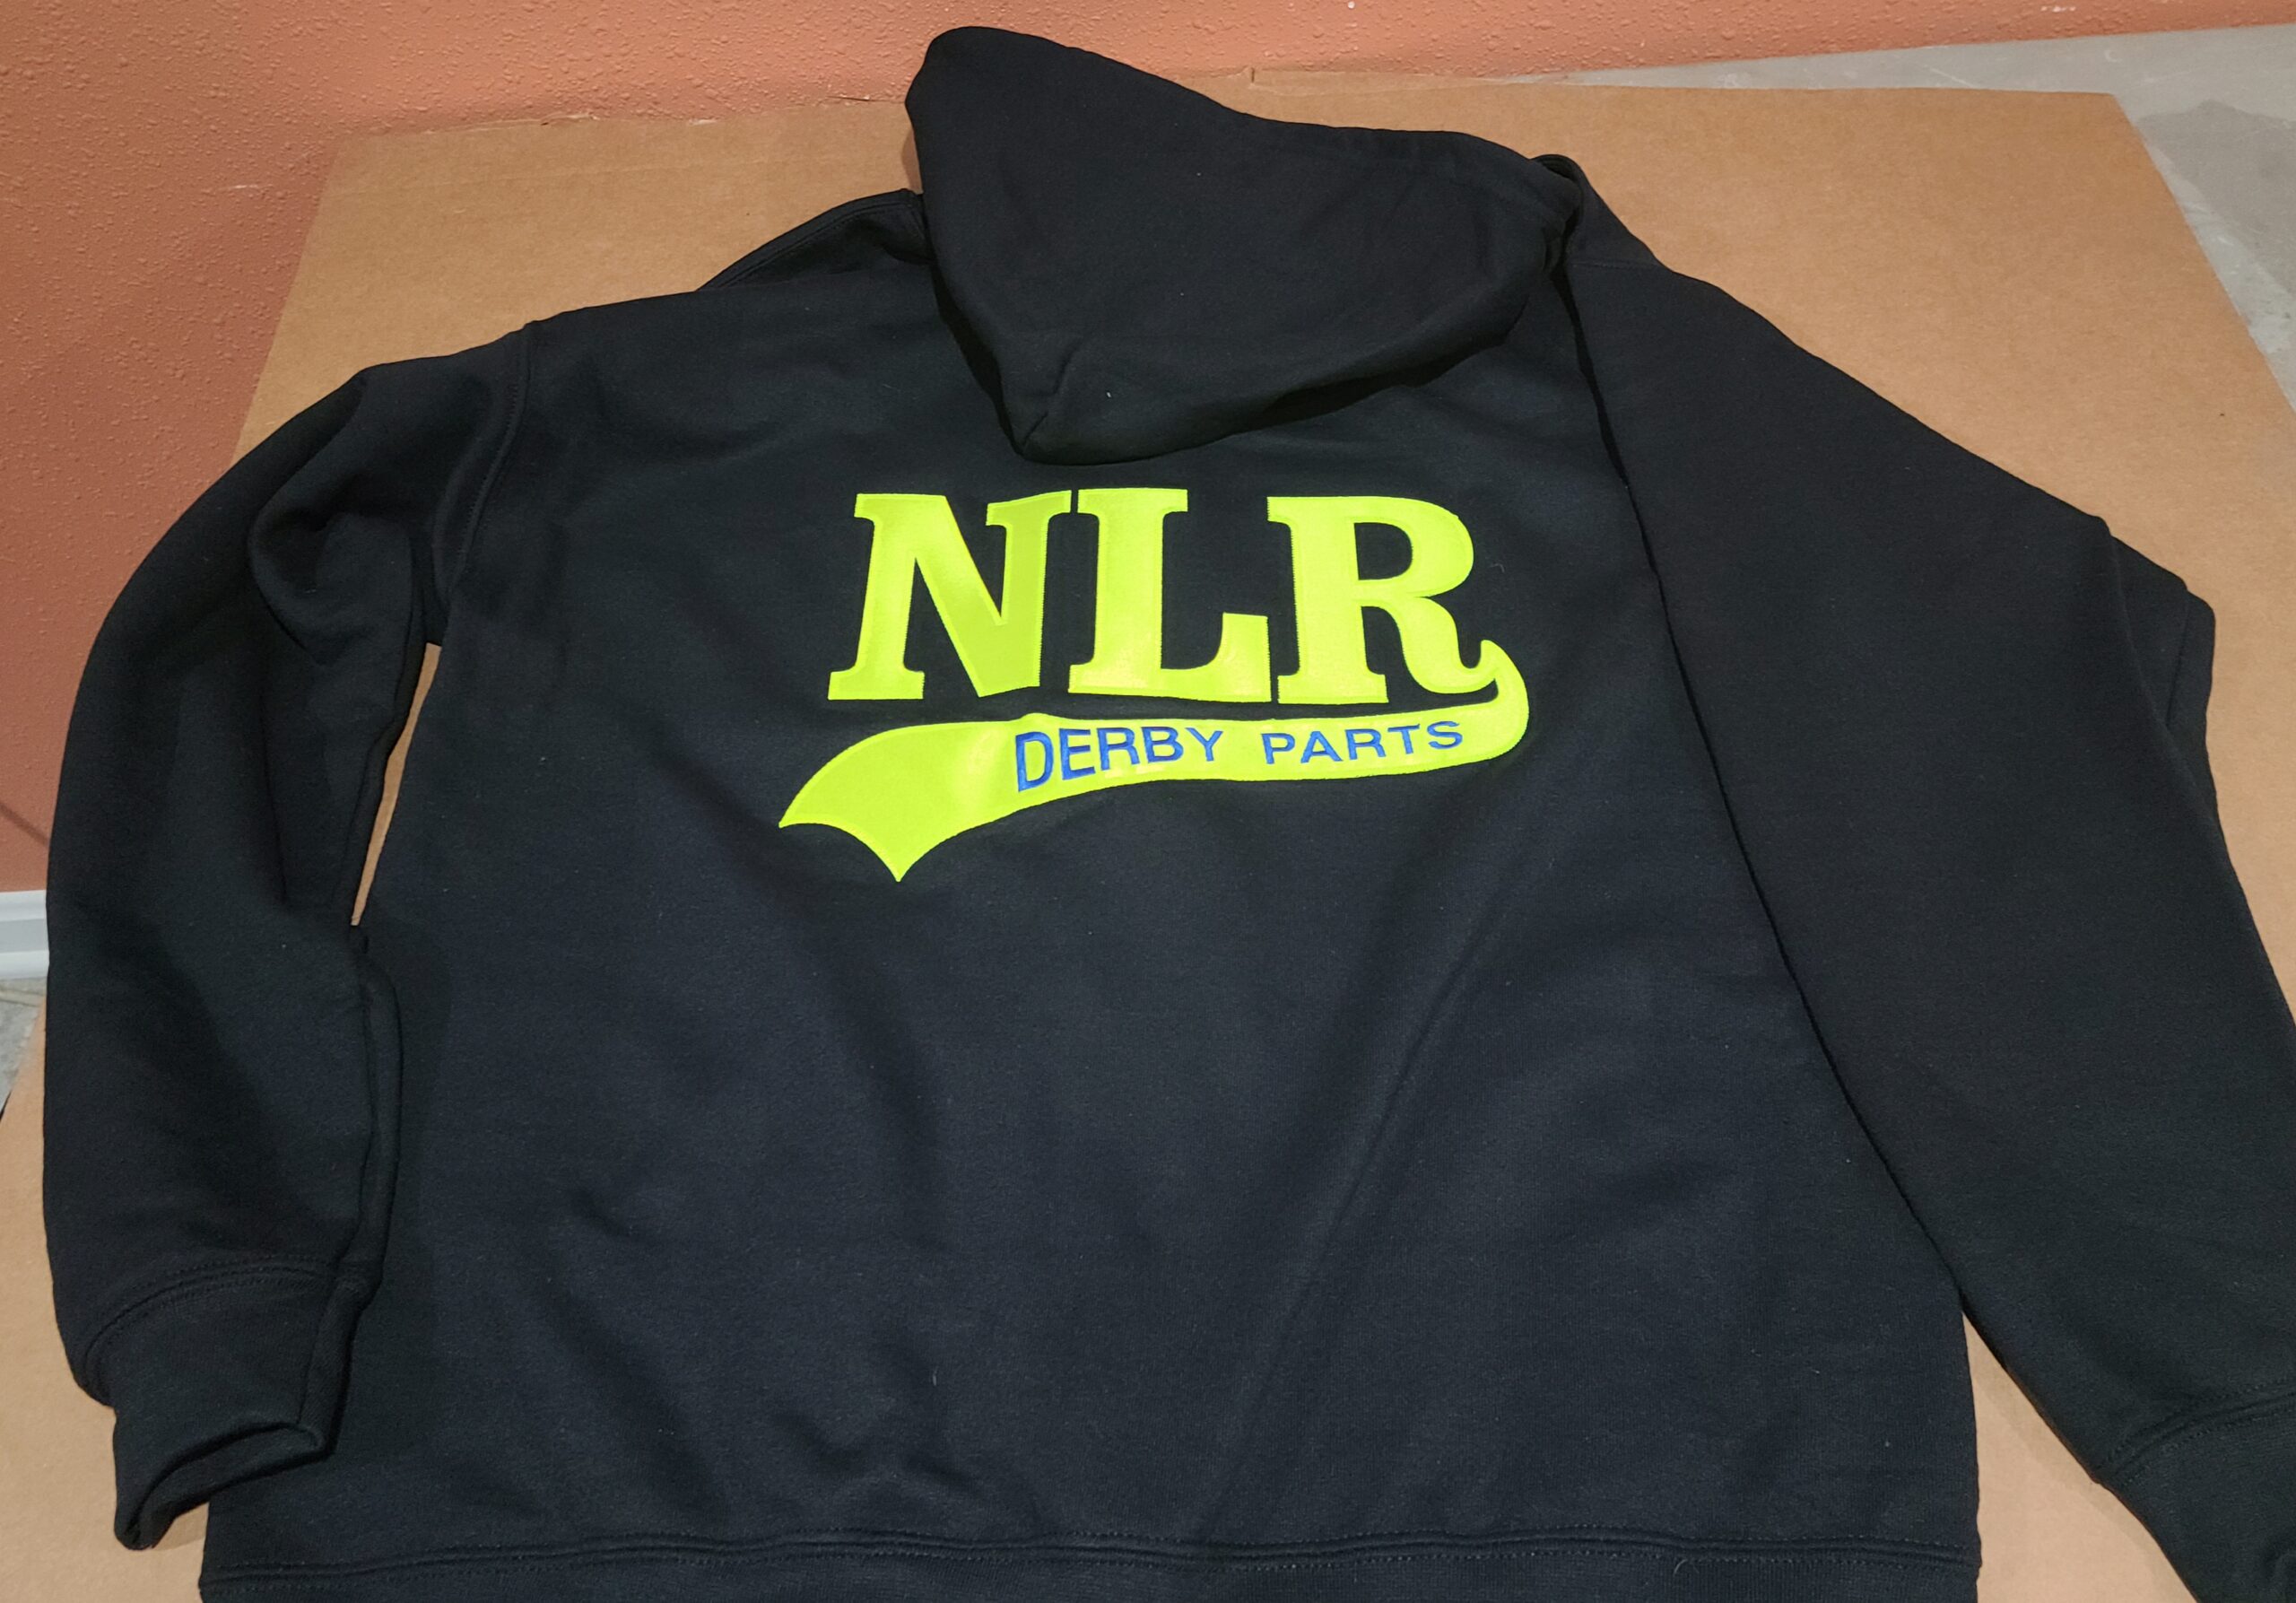 Full Zip up NLR Logo Sweat shirt – NLR Derby Parts